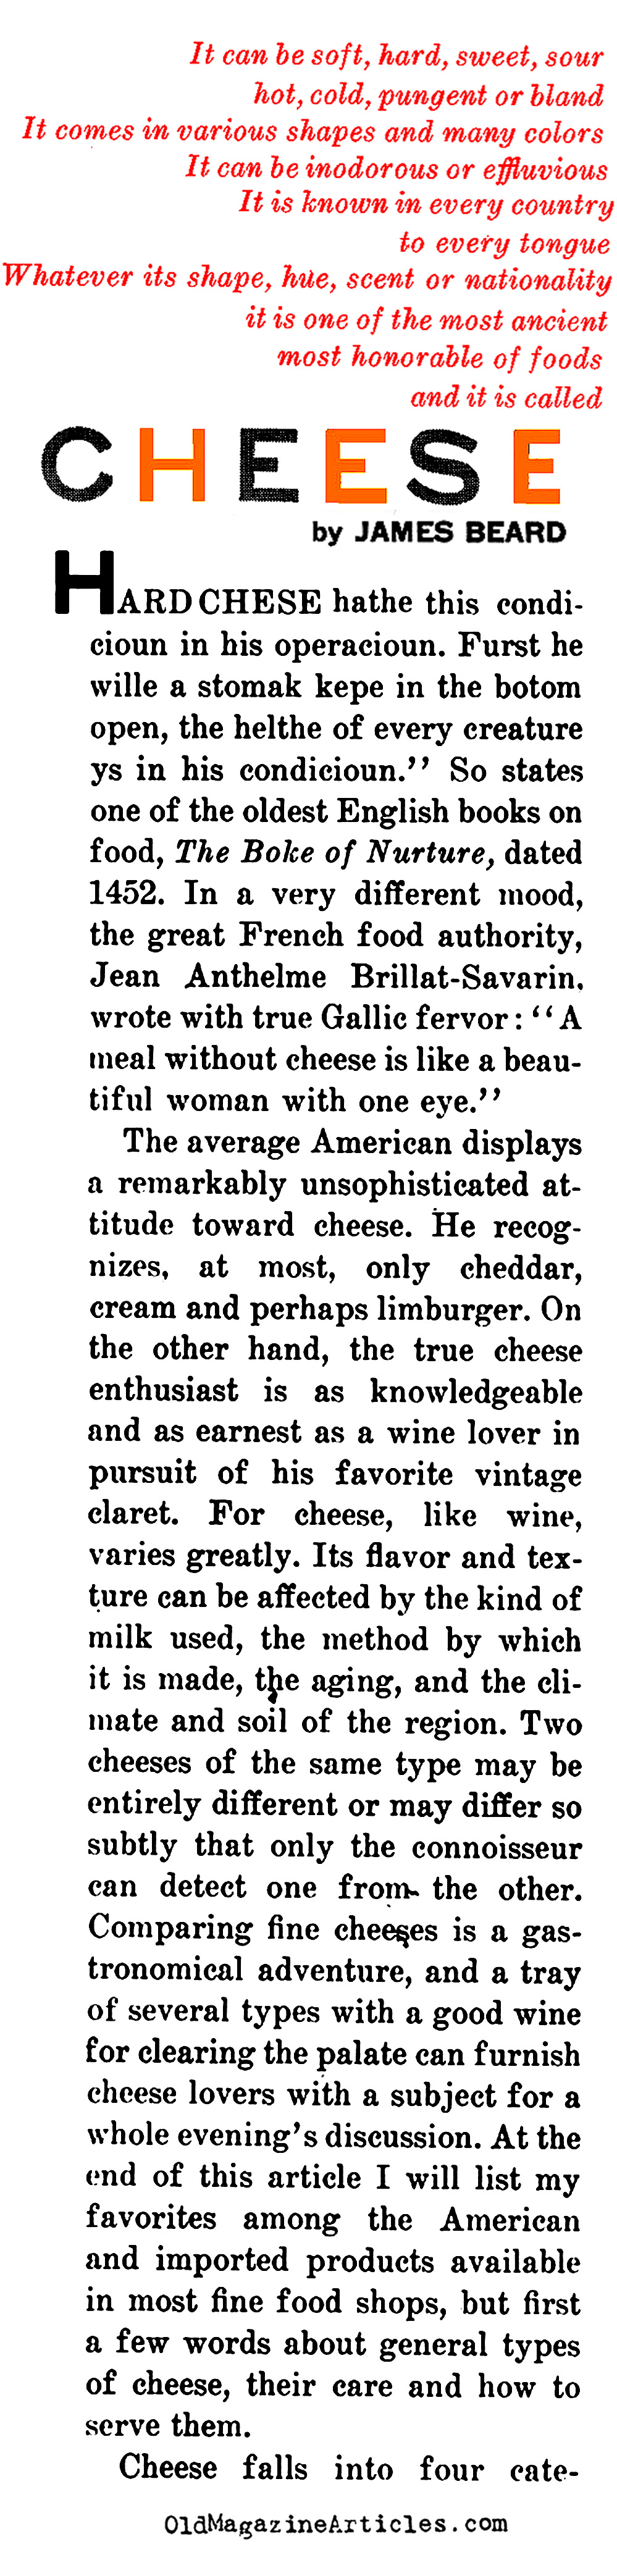 James Beard on Cheese (Gentry Magazine, 1957)